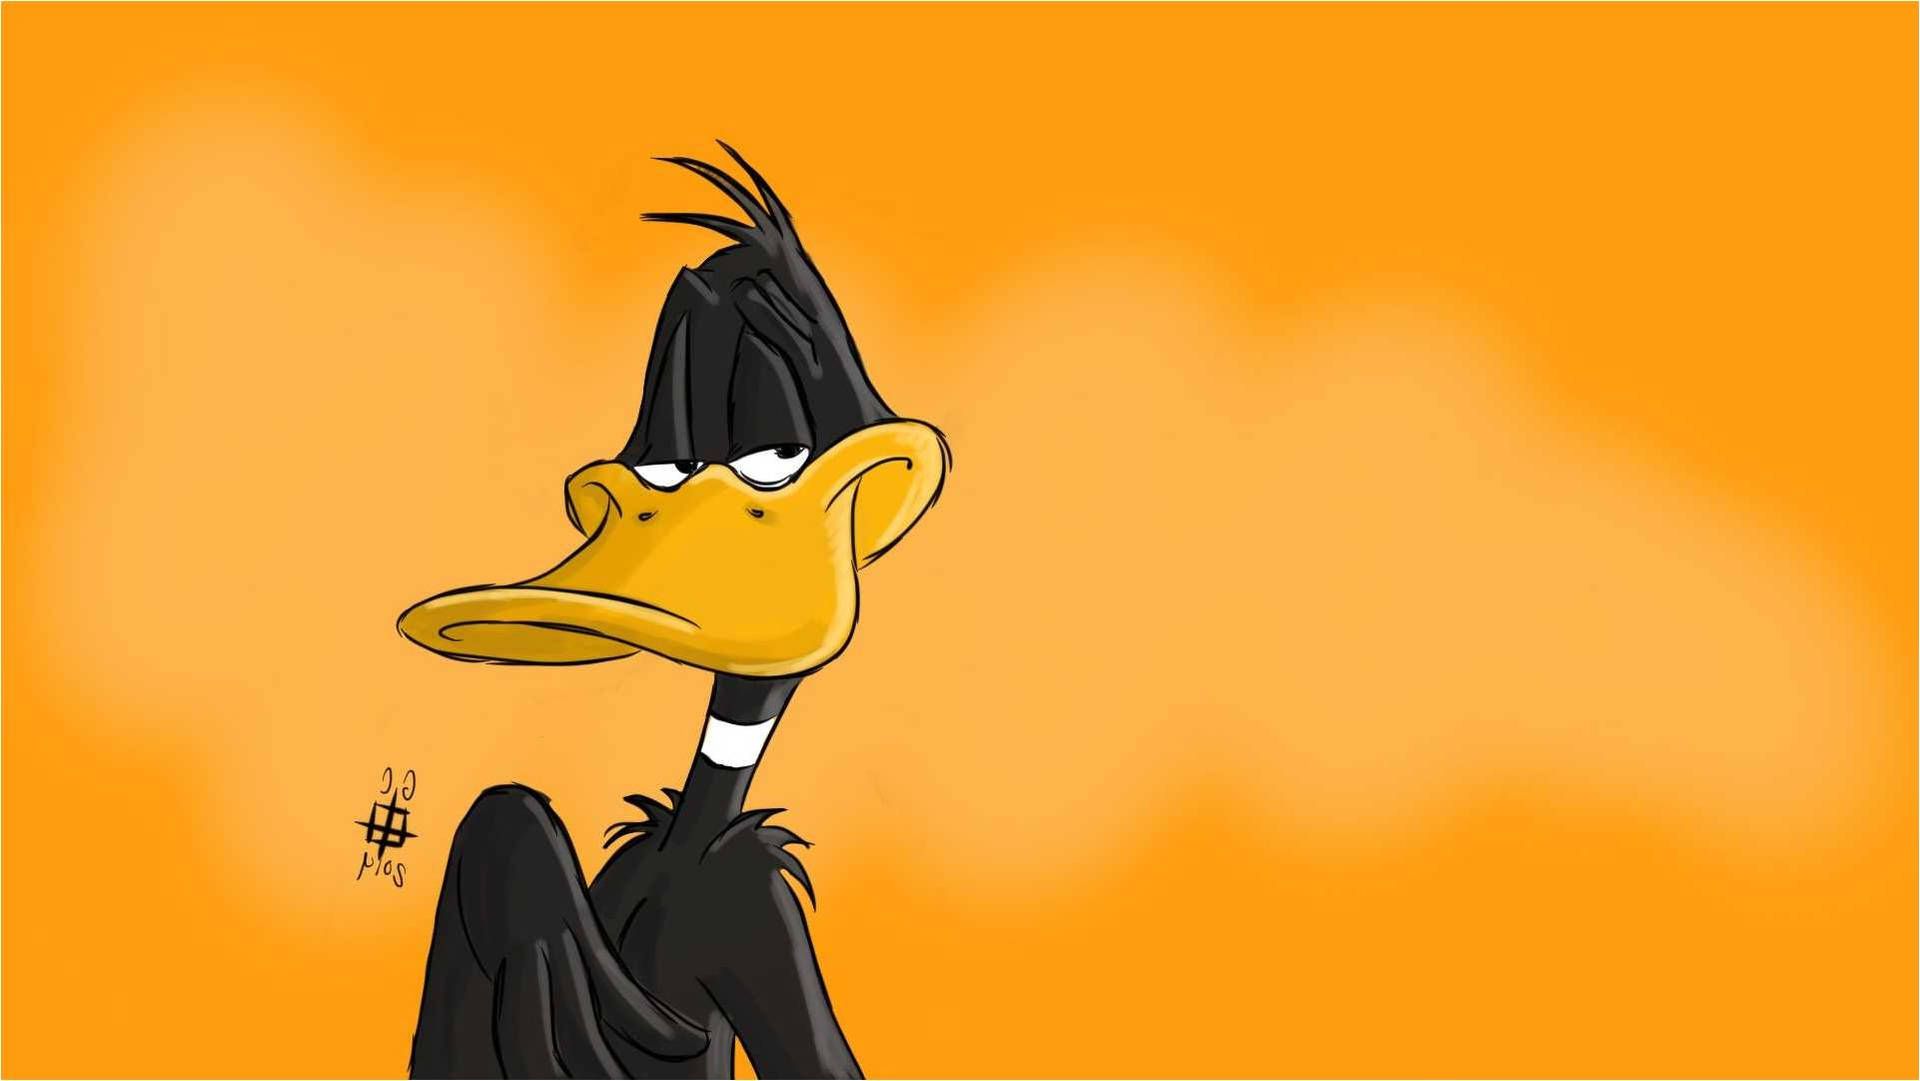 The Looney Tunes Show, Daffy Duck, Warner Bros. Cartoons, wallpaper, background - Looney Tunes